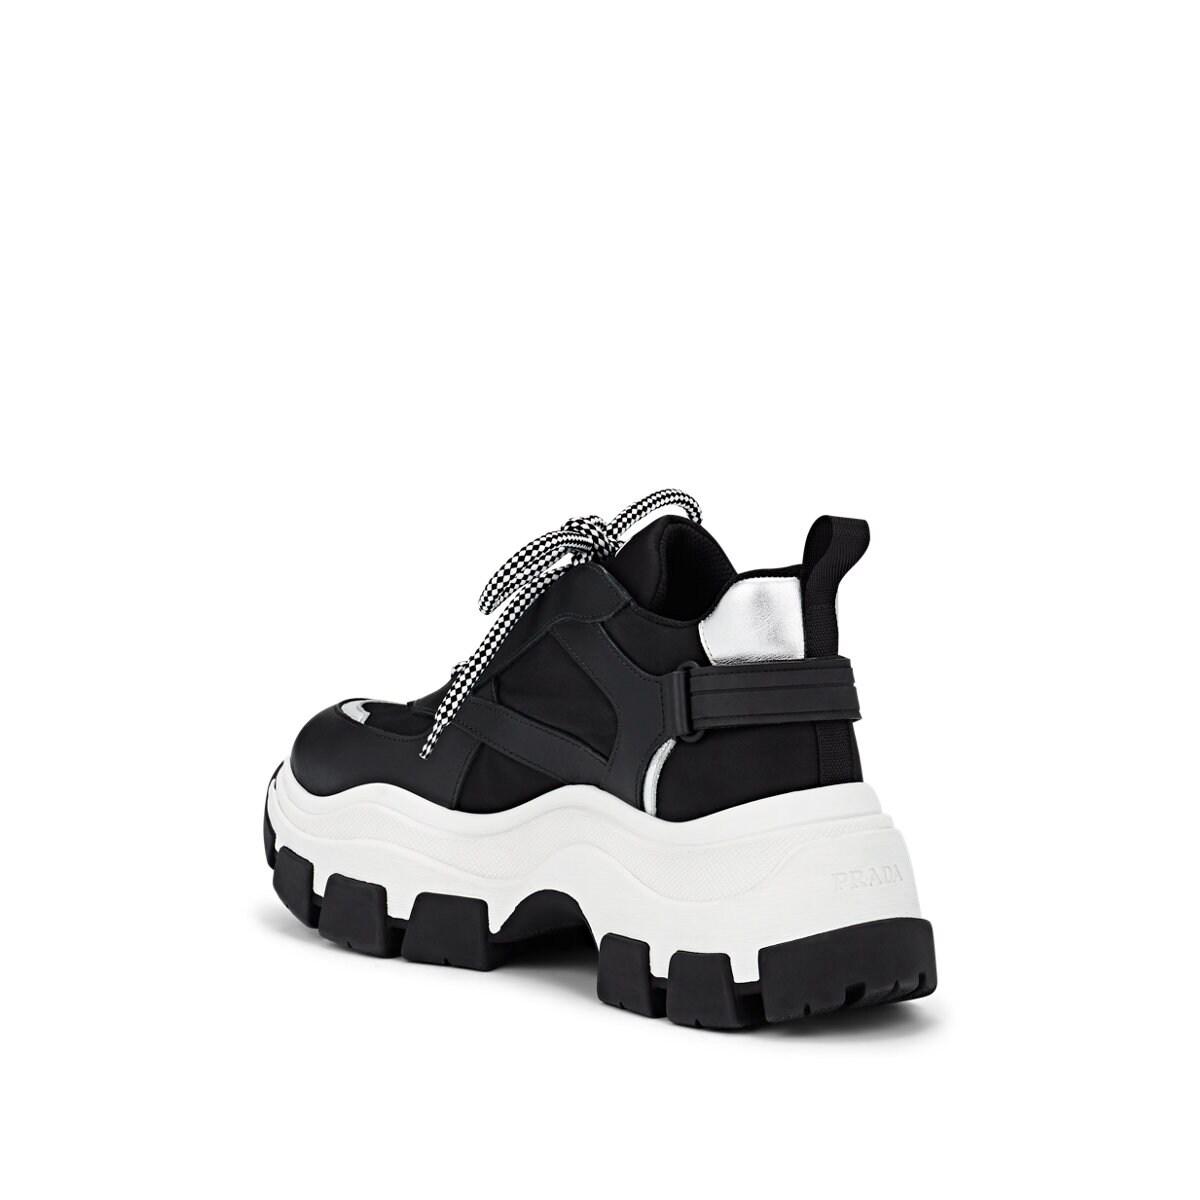 Prada Black Leather Low Top Chunky Sneakers - Lyst